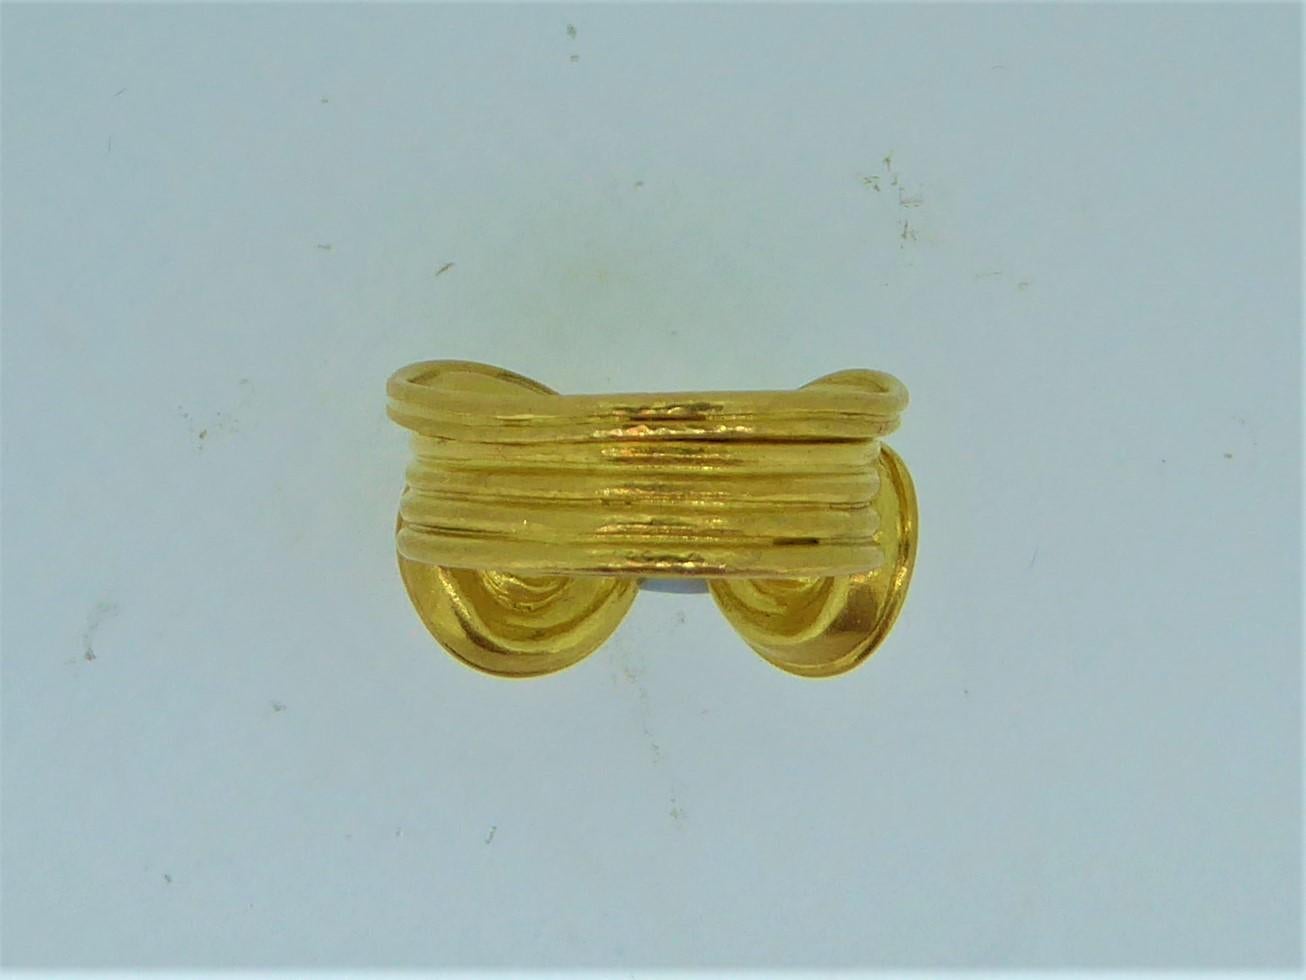 Lalaounis 22 Carat Yellow Gold Swirl Ring. The gold swirl ring with Lalaounis makers marks and stamped 